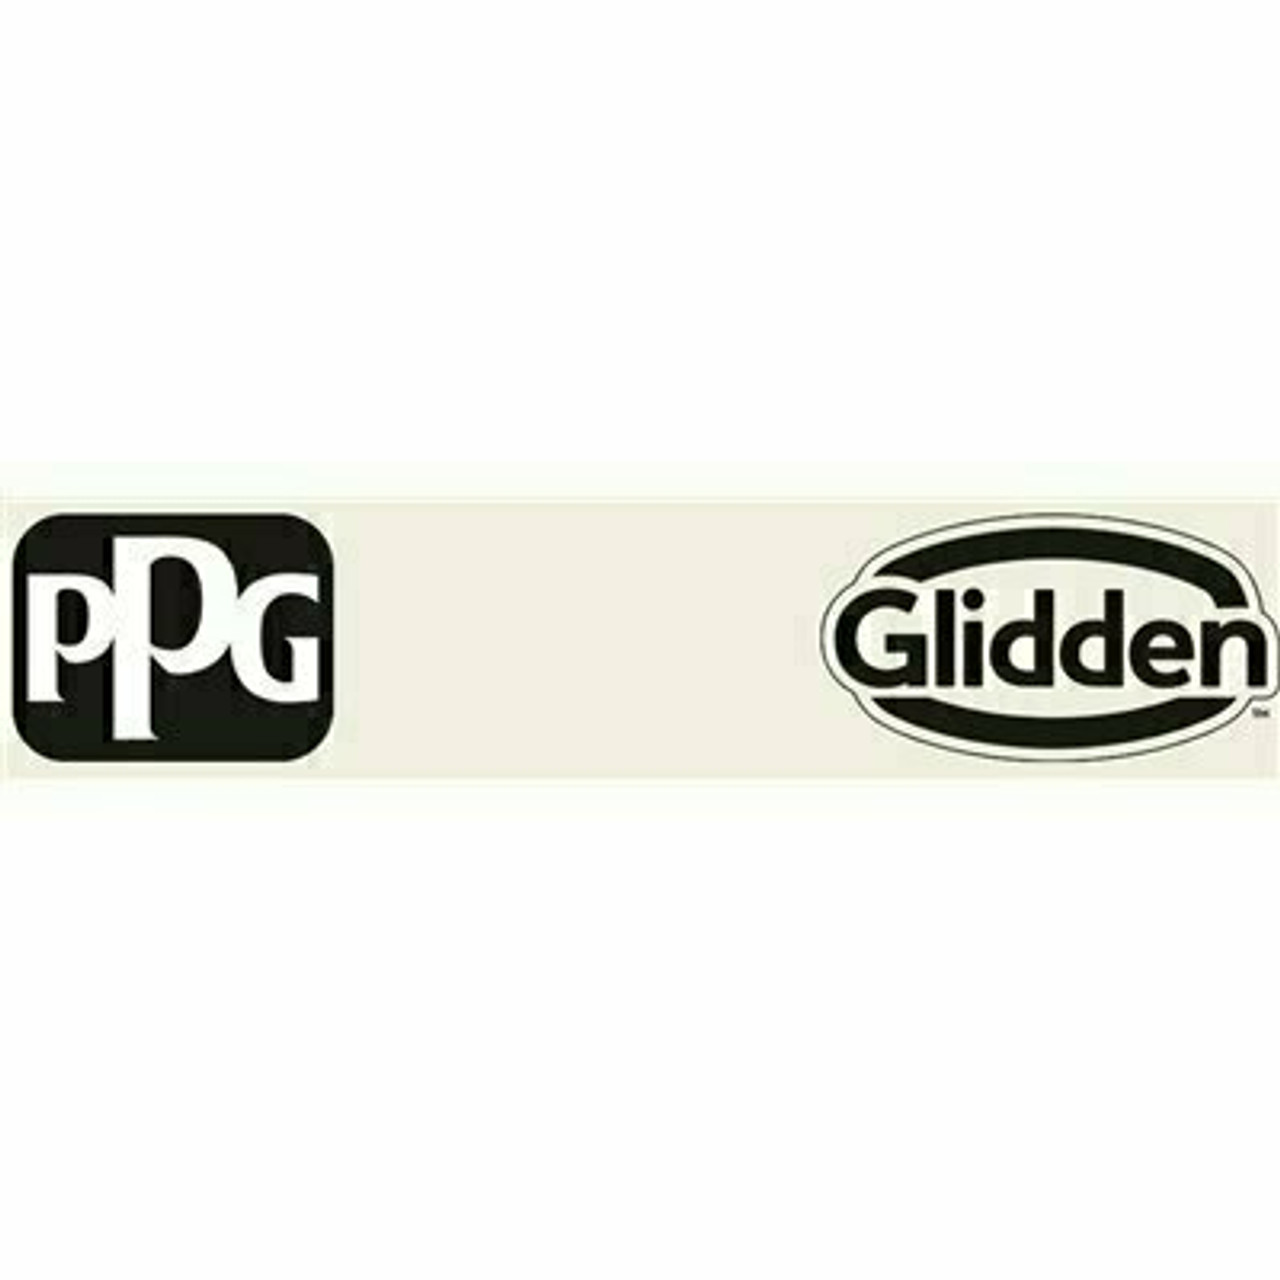 Glidden Premium 1 Gal. #Ppg1006-1 Gypsum Semi-Gloss Interior Latex Paint